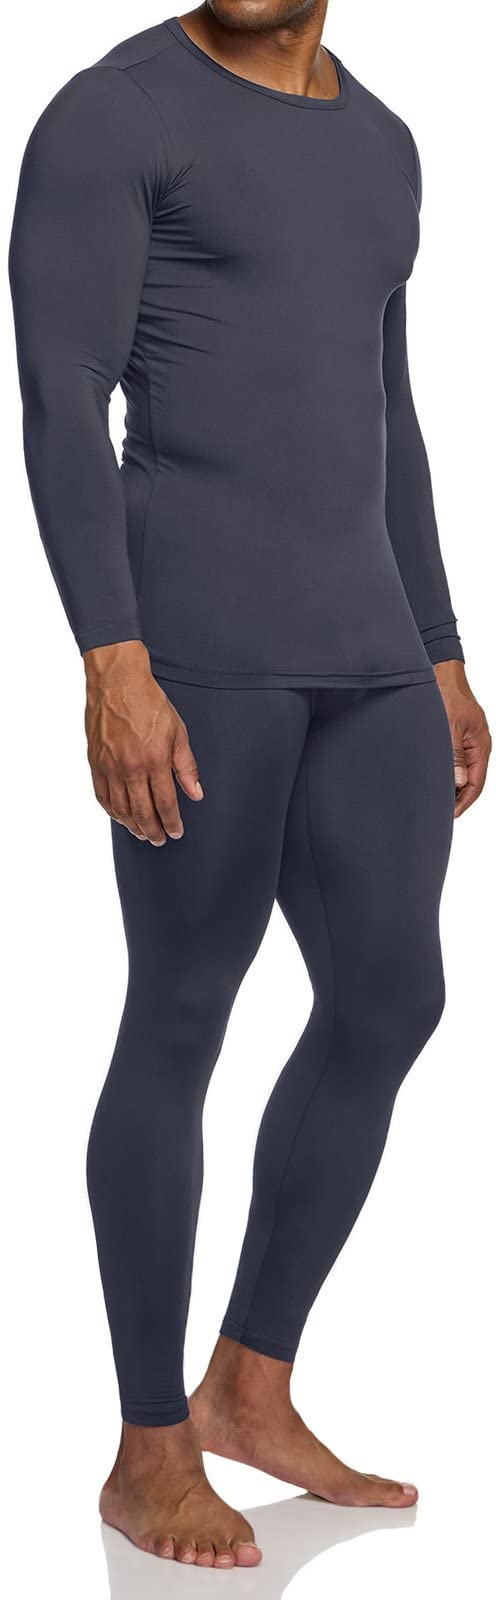 TSLA Men's Thermal Underwear Set, Microfiber Soft Fleece Lined Long Johns, Winter Warm Base Layer Top & Bottom, Soft Micro Fleece Dark Grey, Small